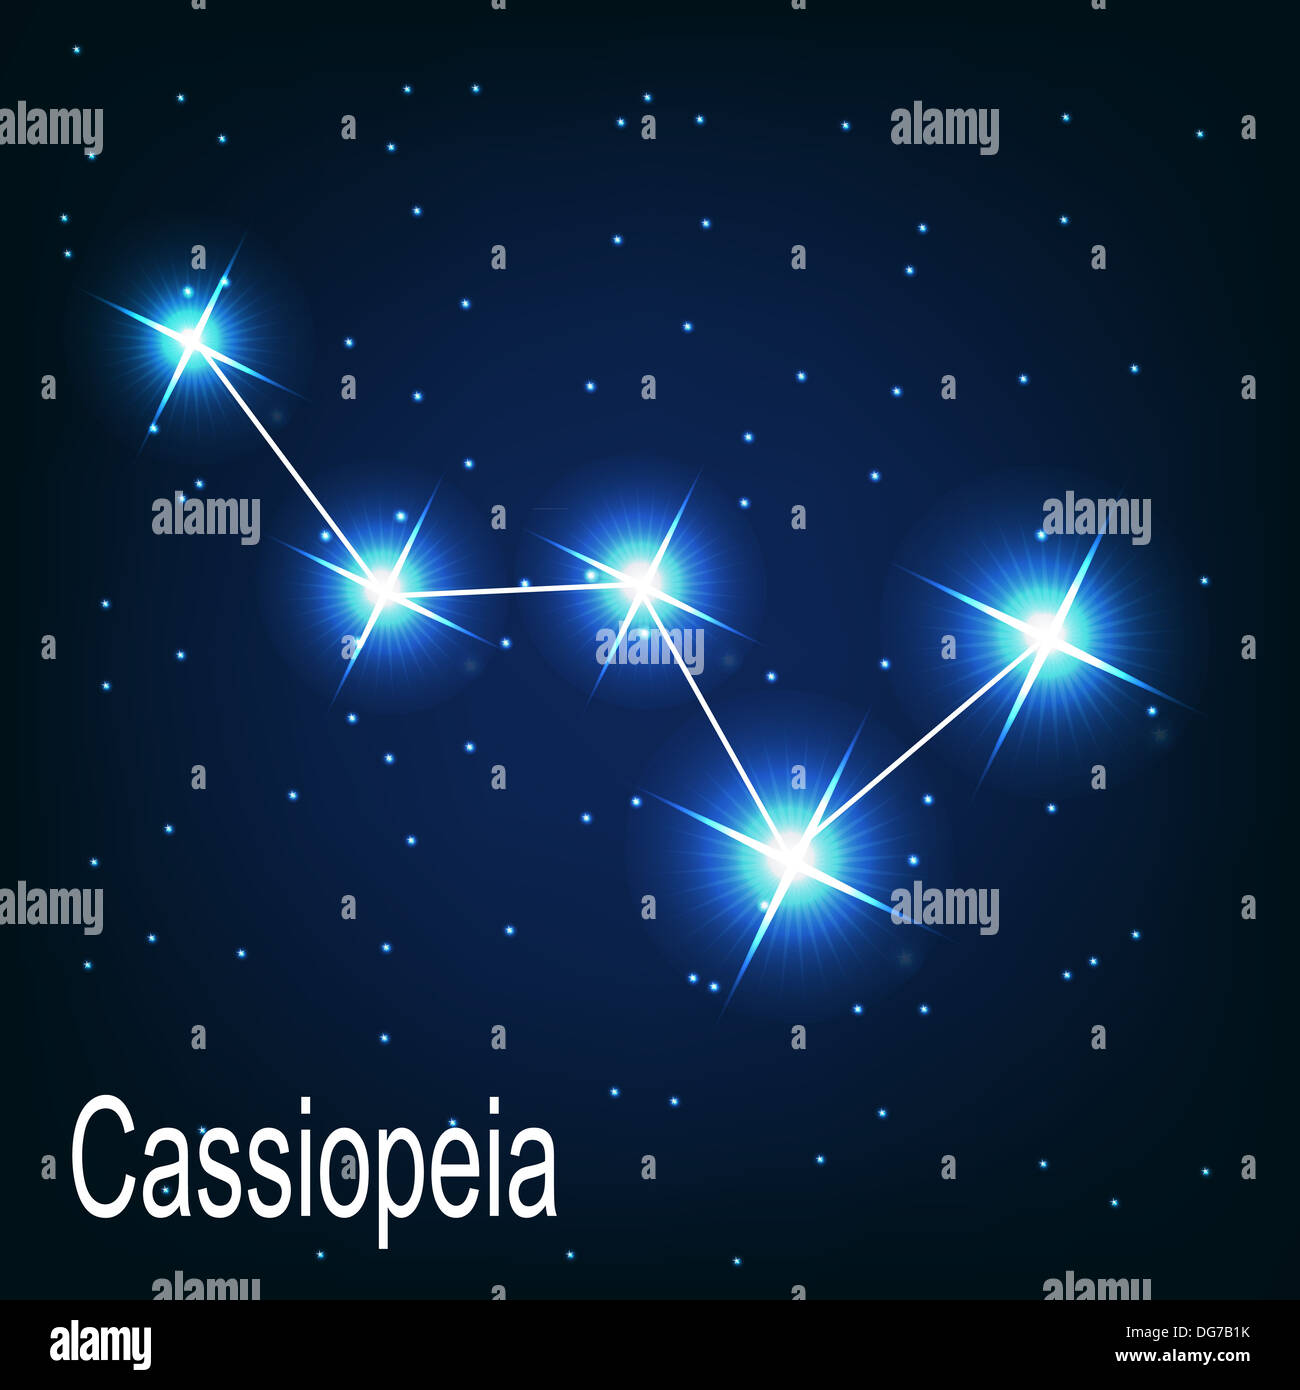 cassiopeia constellation stars